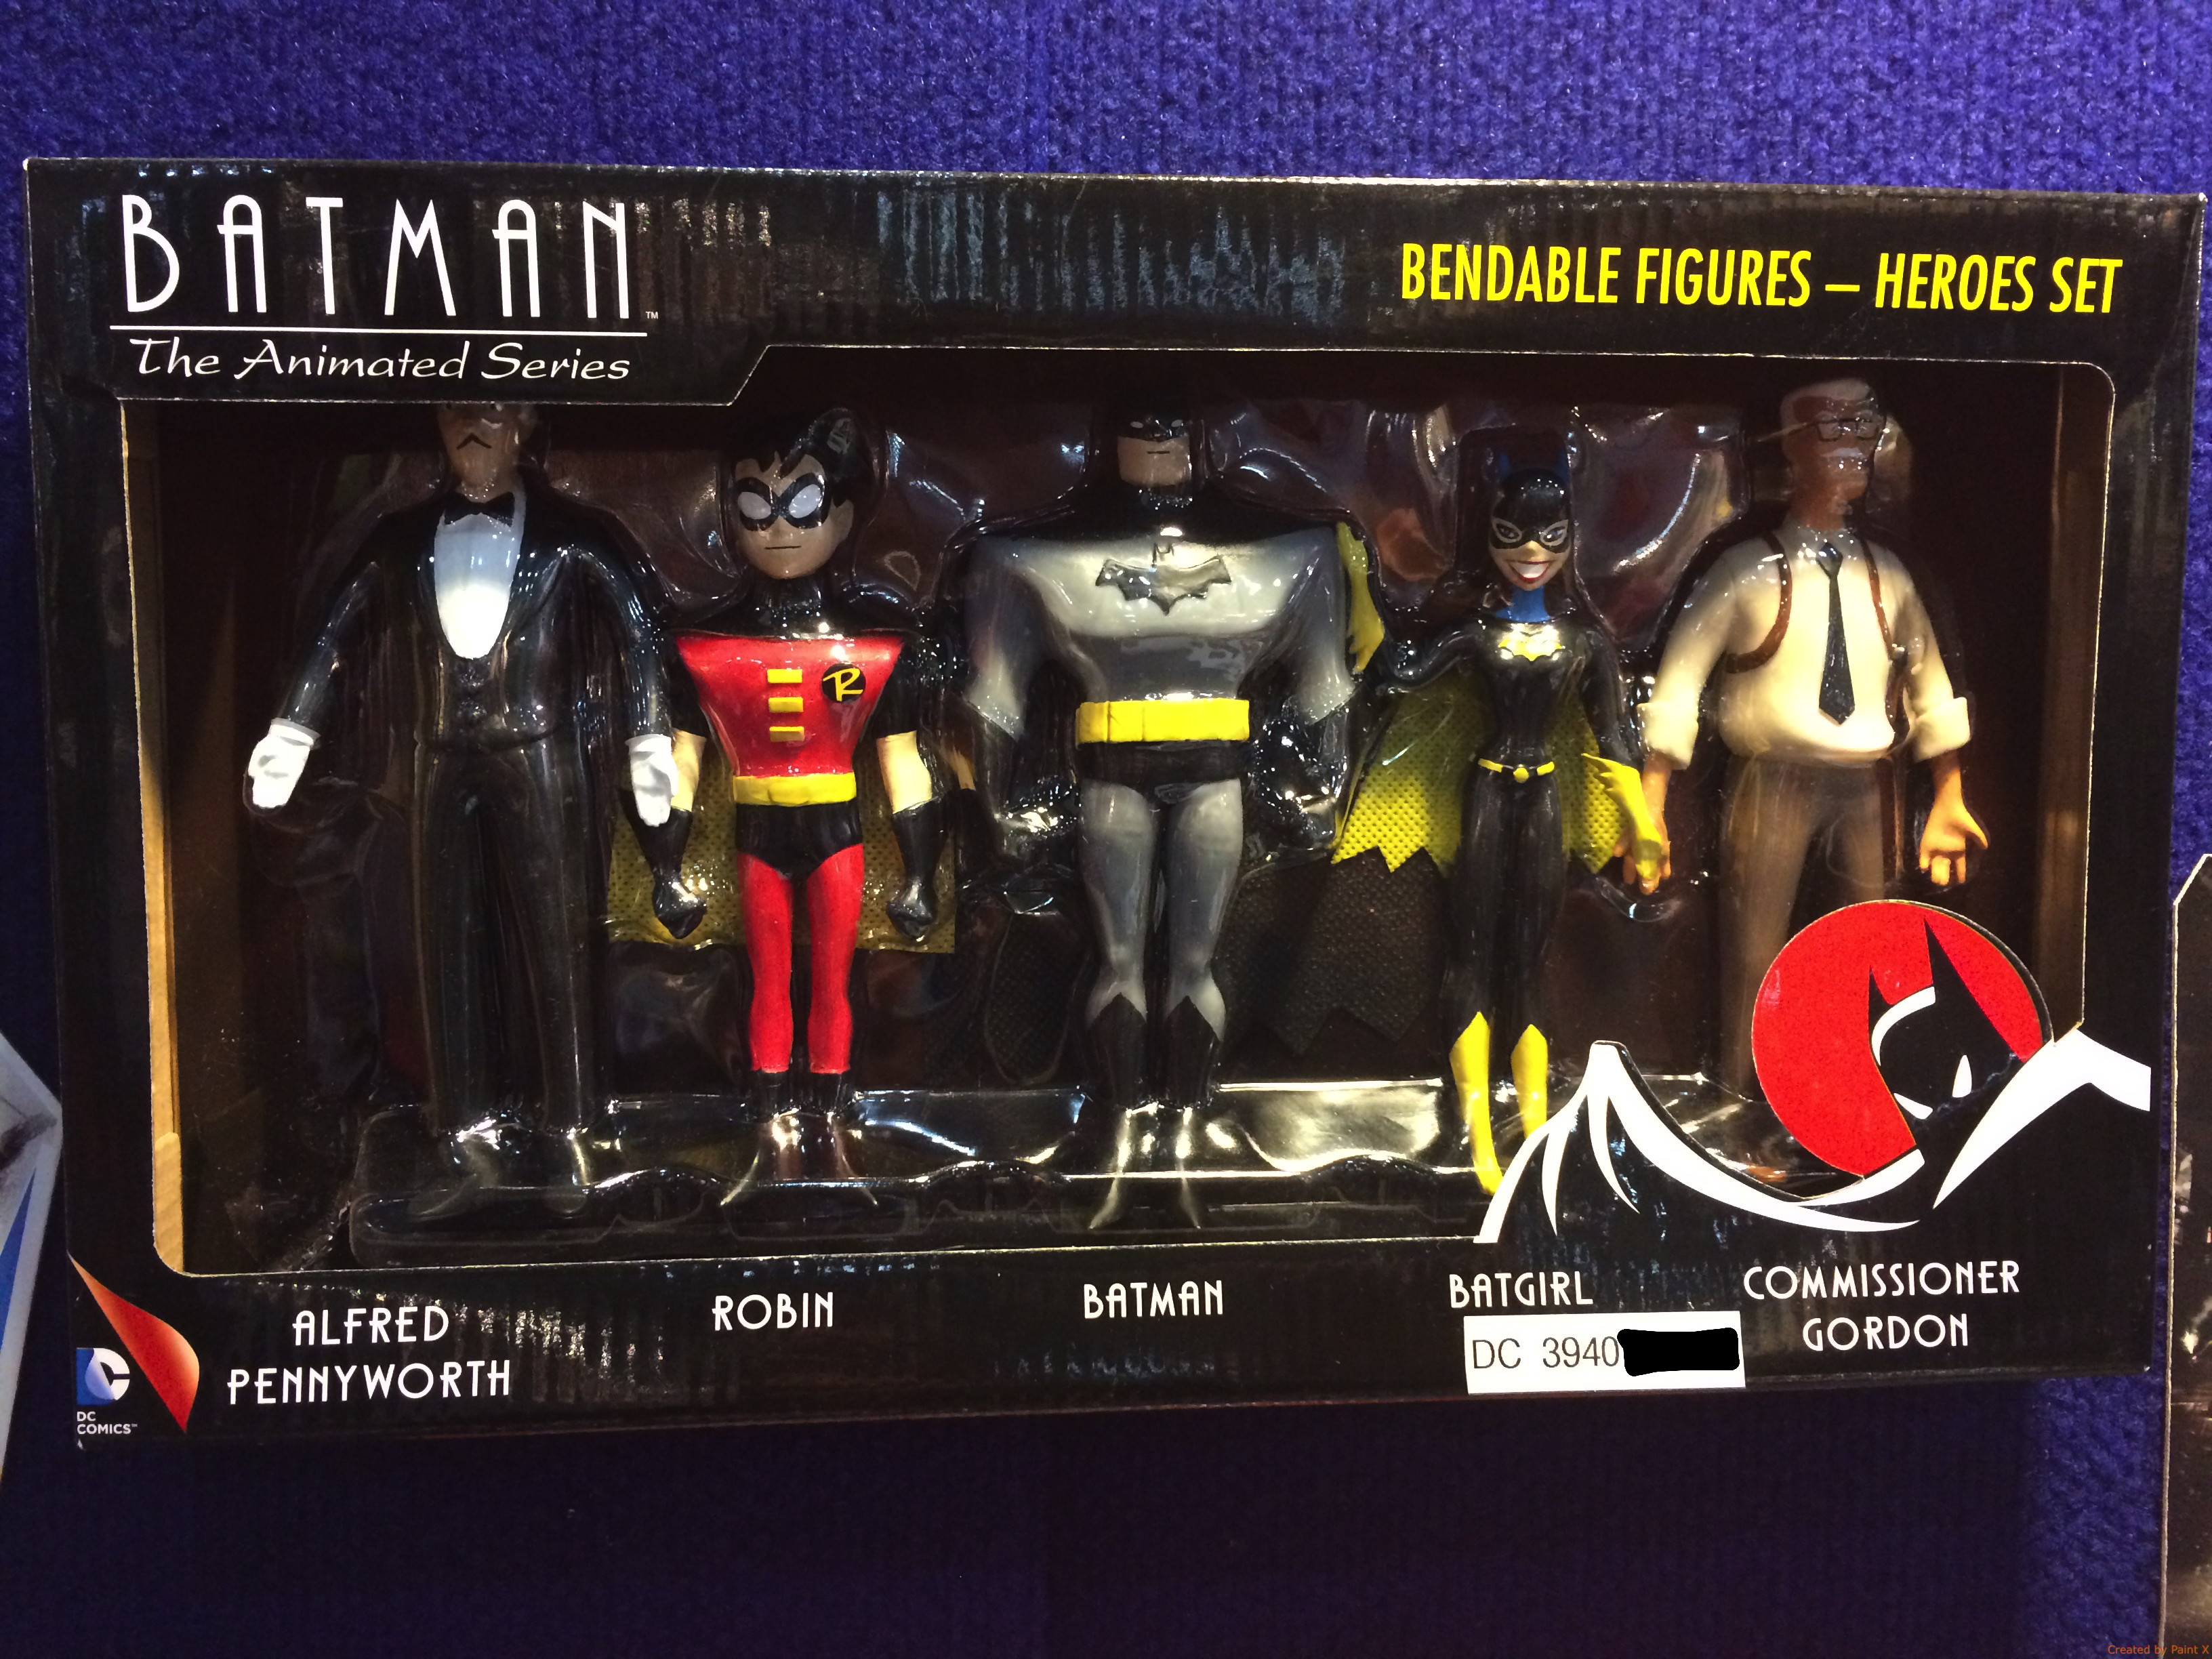 NEW The New Batman Adventures “Heroes Set” of 5 Bendable Figures NJ Croce DC3940 